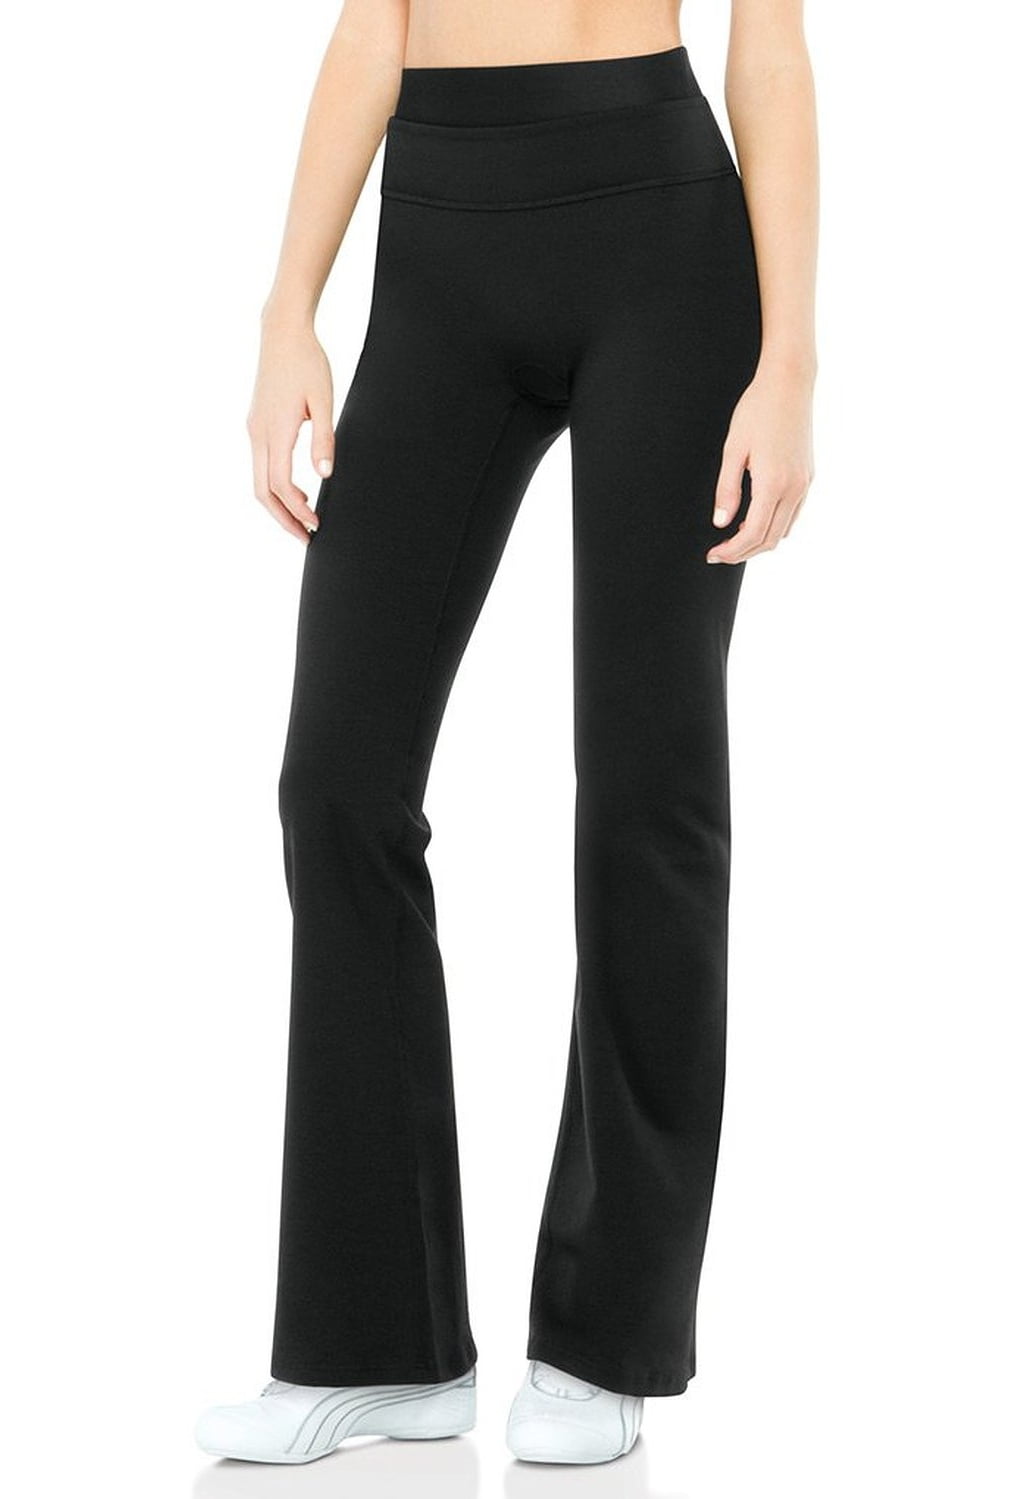 Spanx - Spanx Active Women's Power Pant Black Pants 1230 - Walmart.com ...